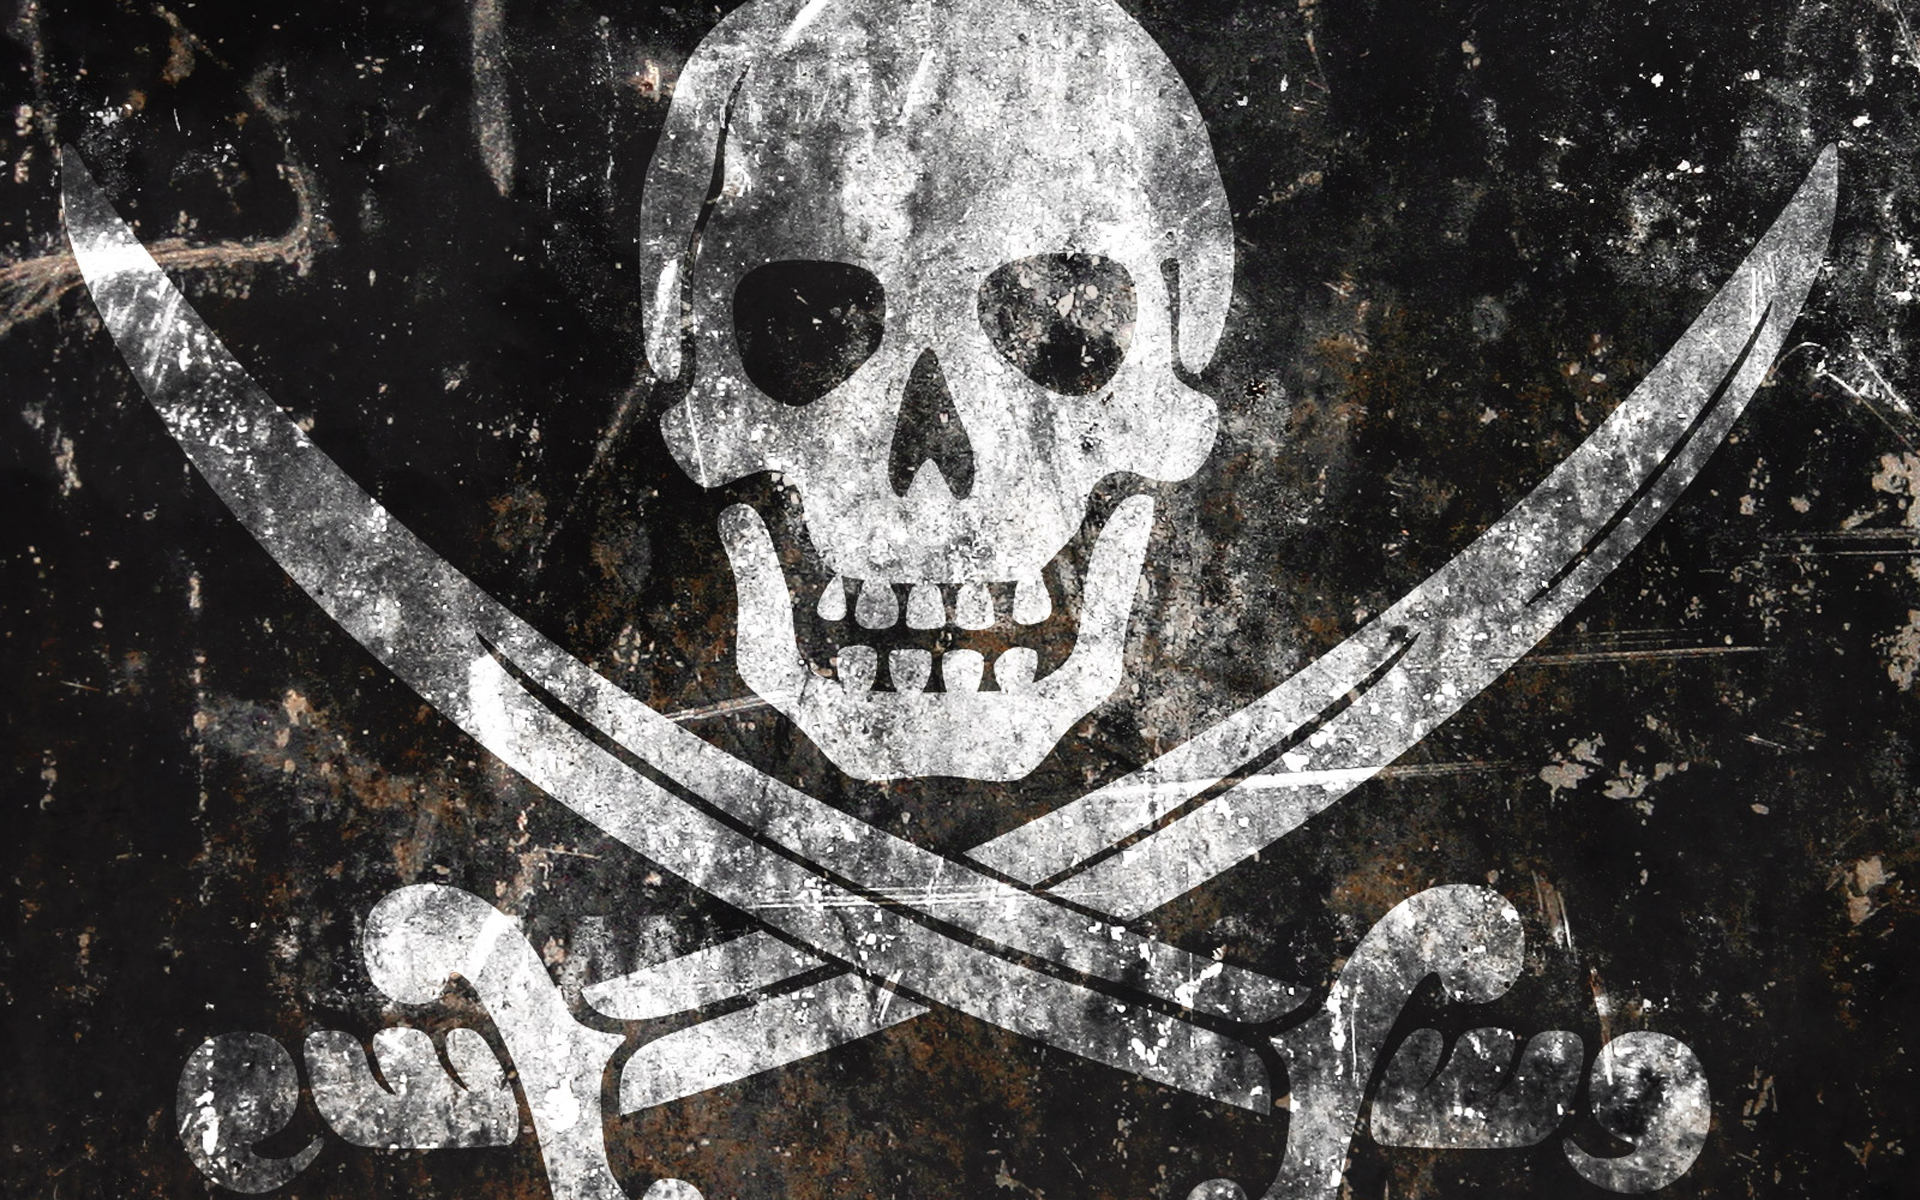 Download the Battered Up Pirate Flag Wallpaper Battered